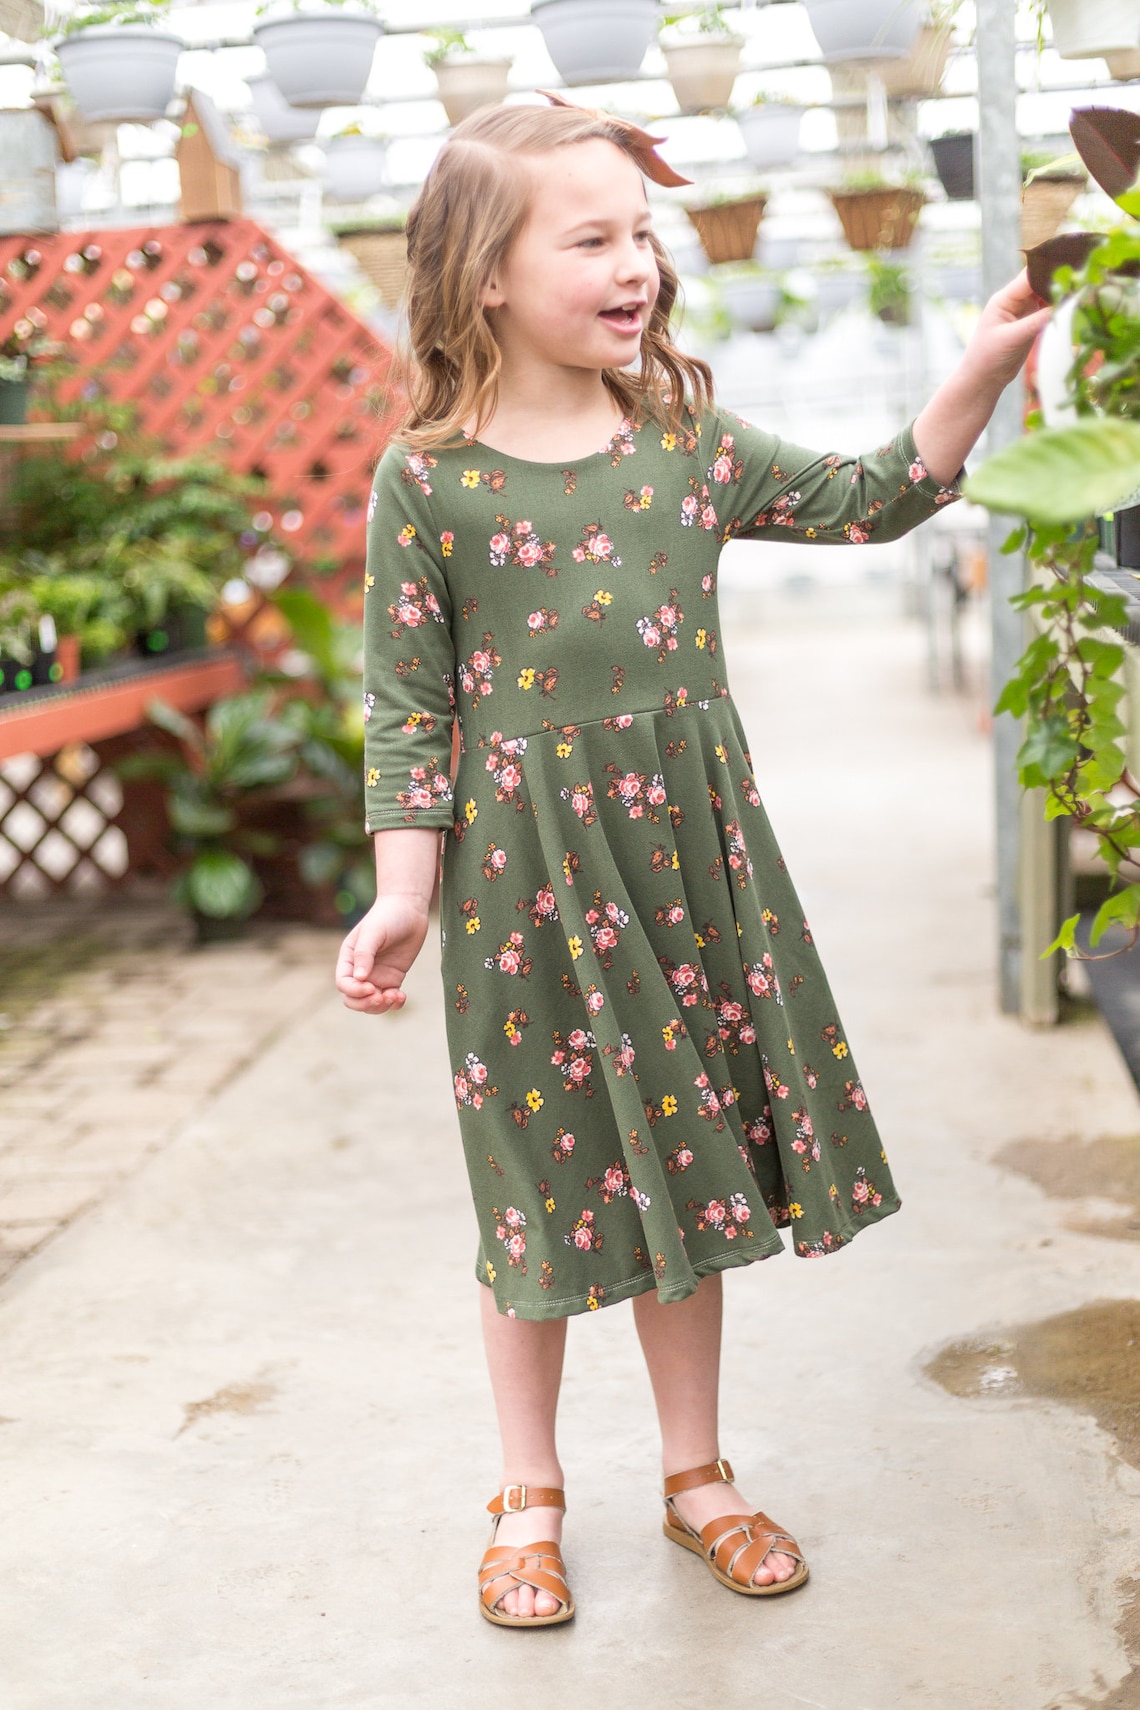 Modest Handmade Dress Girl/Toddler/Baby Olive Floral Winter | Etsy